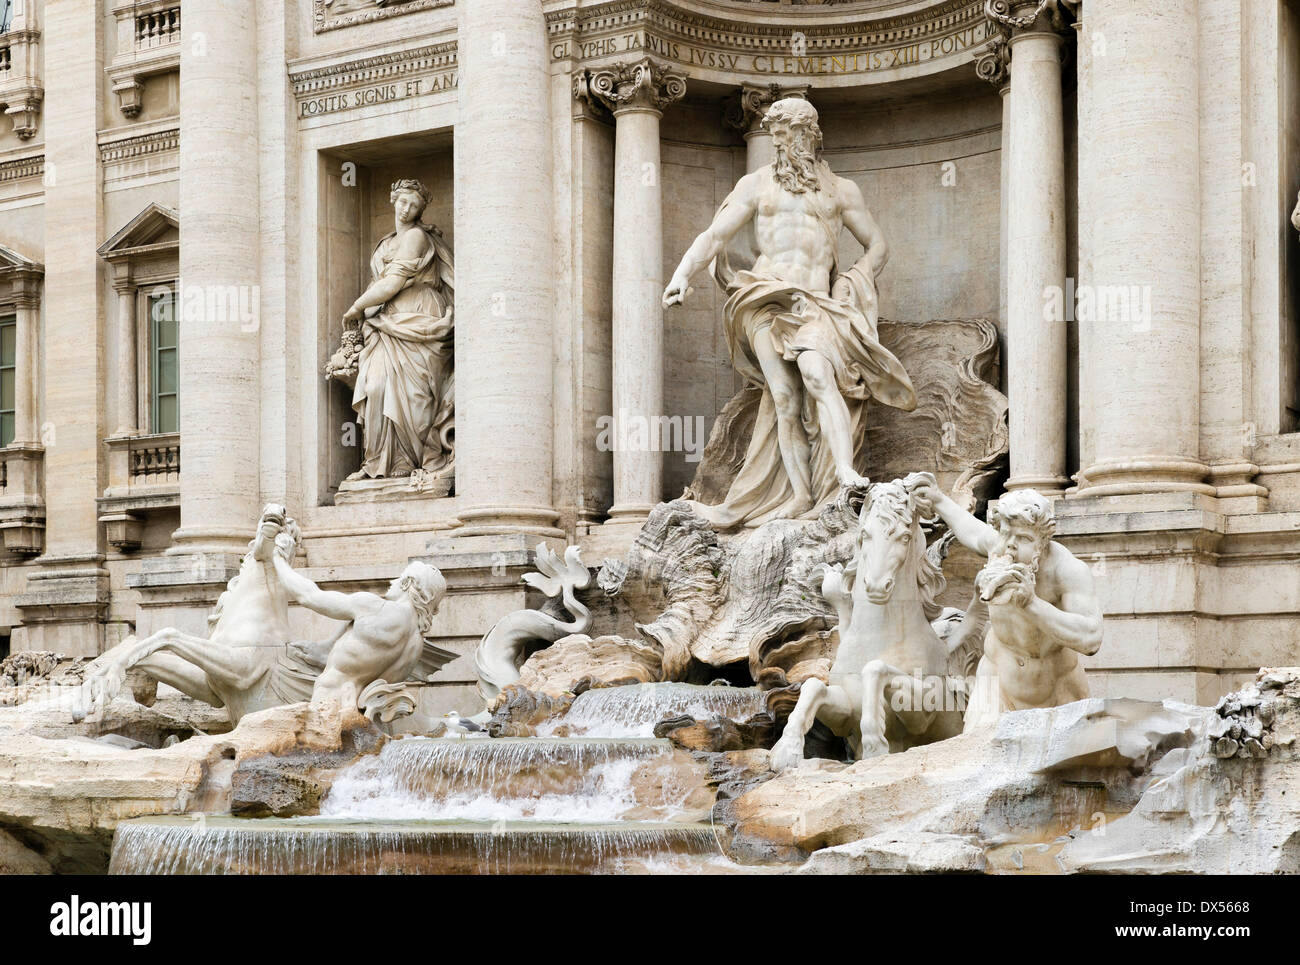 Oceanus by Pietro Bracci, Triton with Horse, Trevi Fountain, Fontana di Trevi, designed by Nicola Salvi, built 1732-1762 Stock Photo